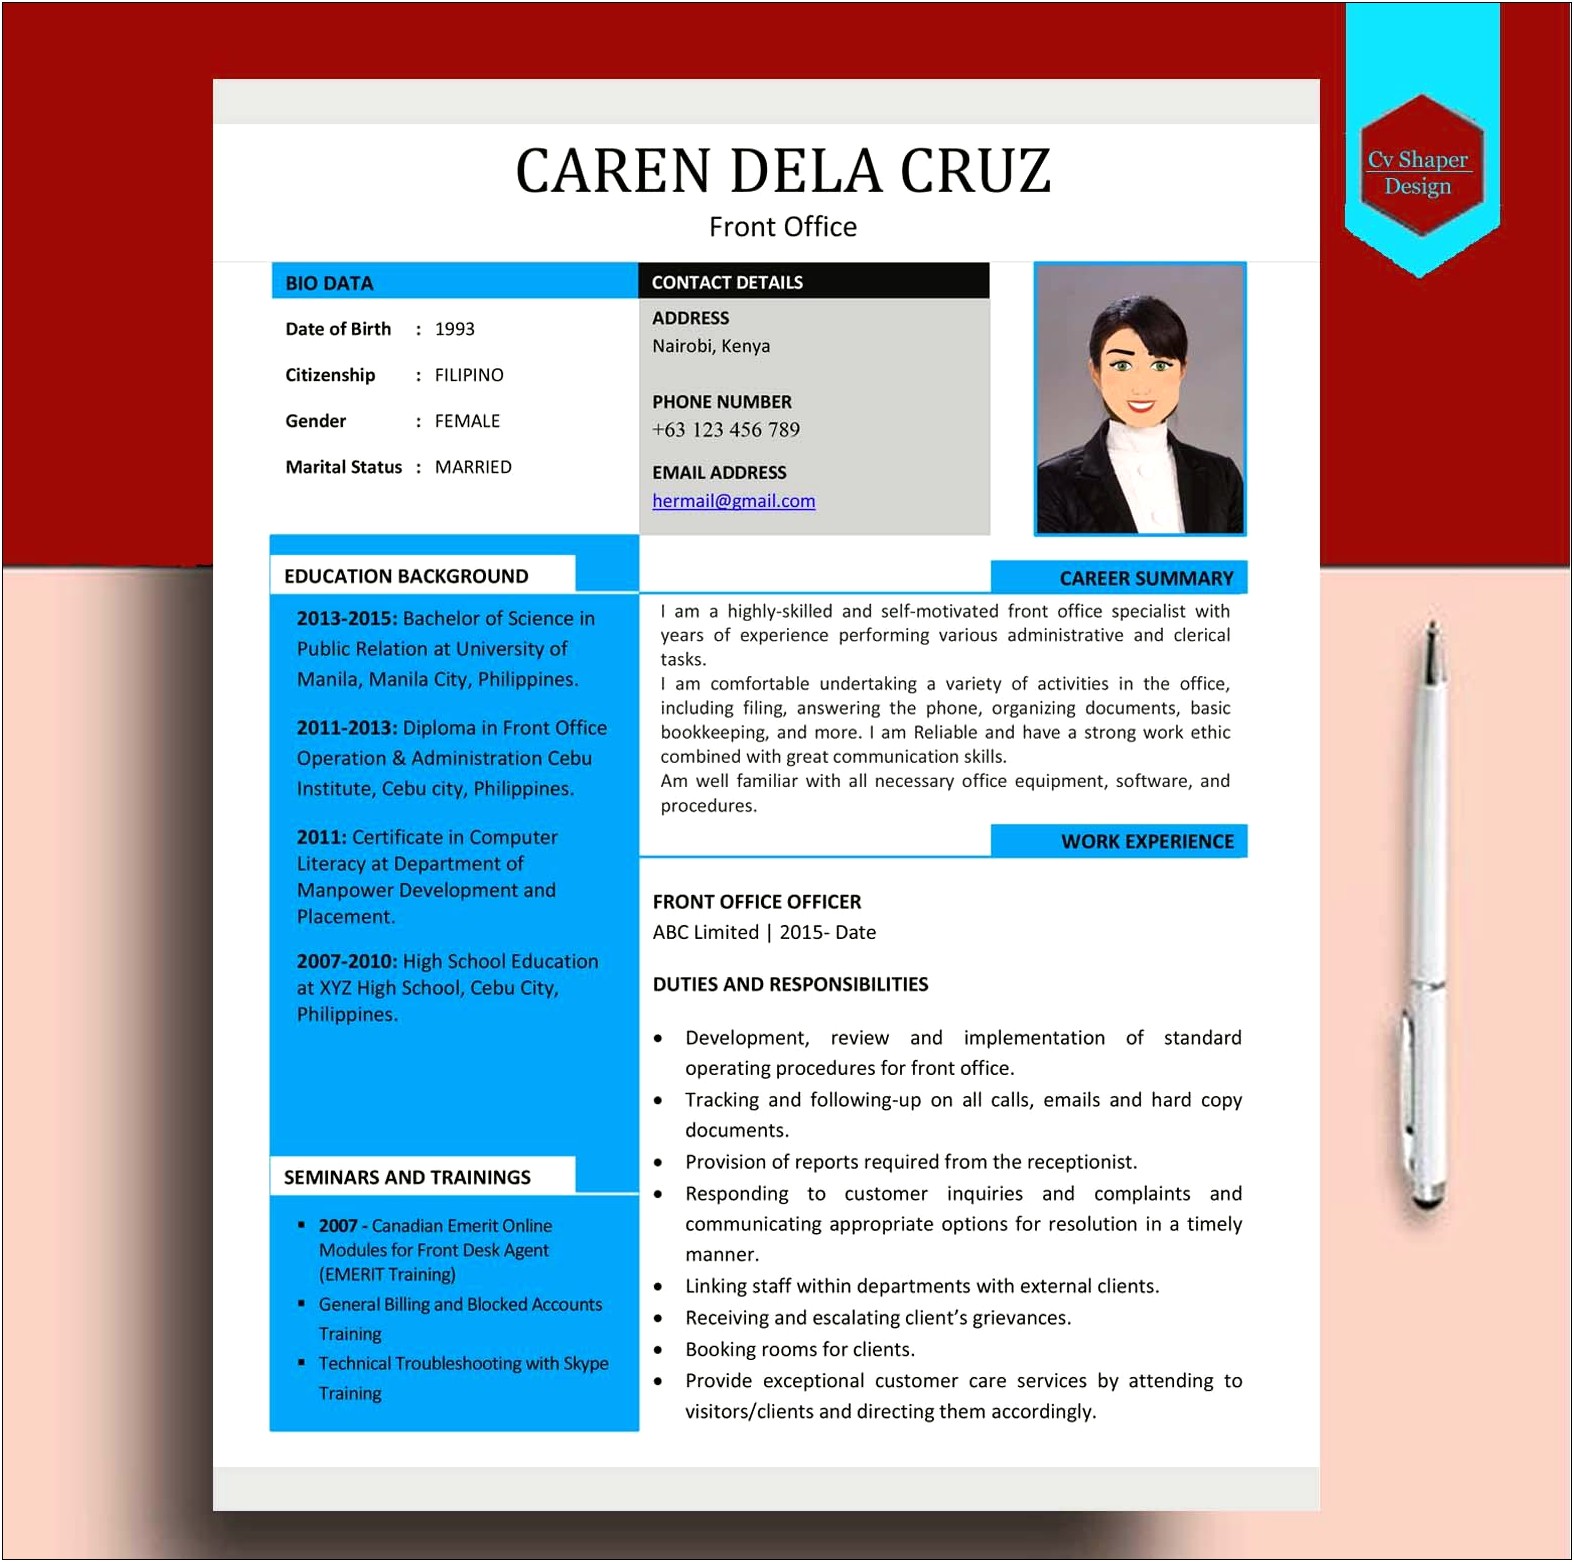 Resume Description For Front Desk Agent